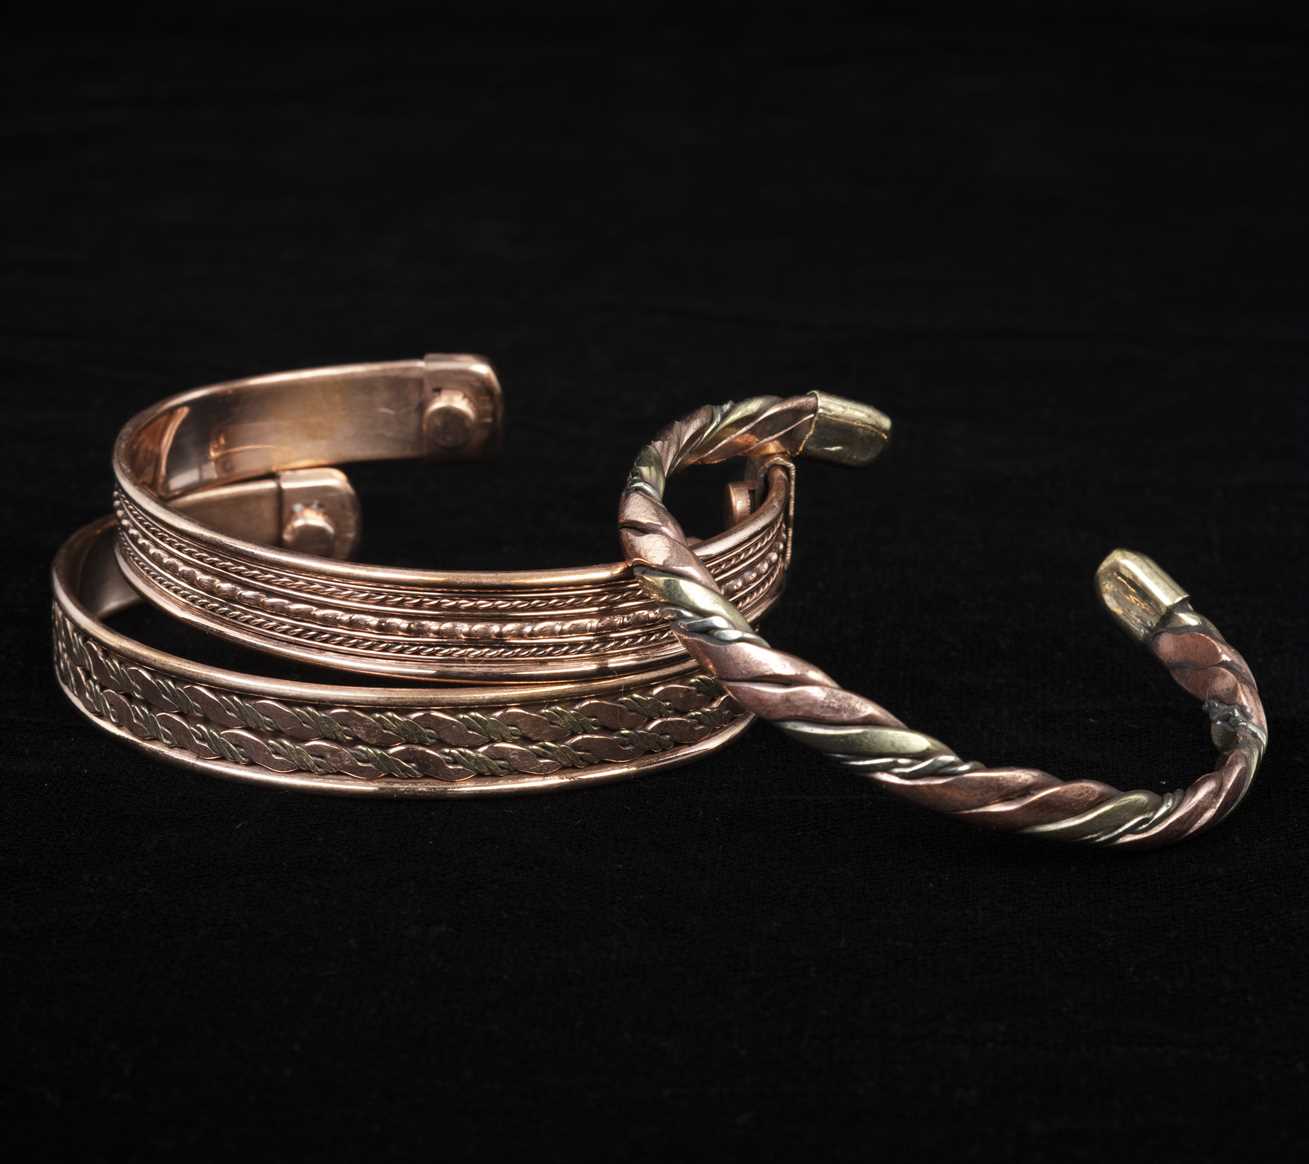 Tibetan Adjustable Copper Bracelets - Set of 3 - Indian Pattern Meditation Jewelry